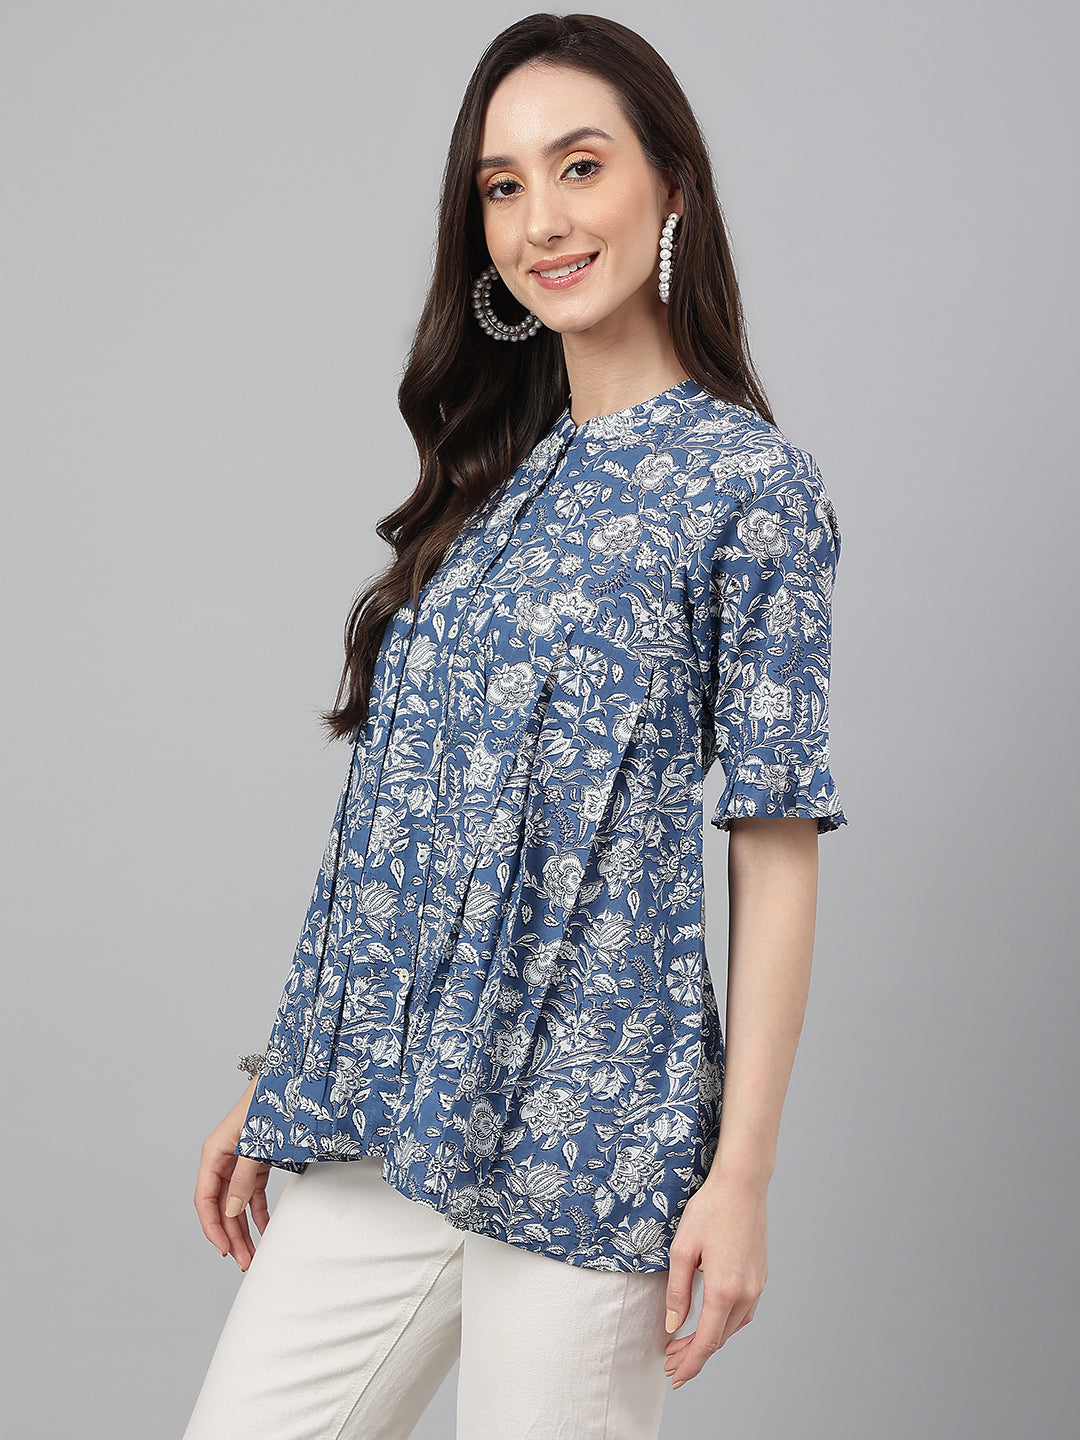 Women's Floral Print Blue Cotton Tops - Janasya